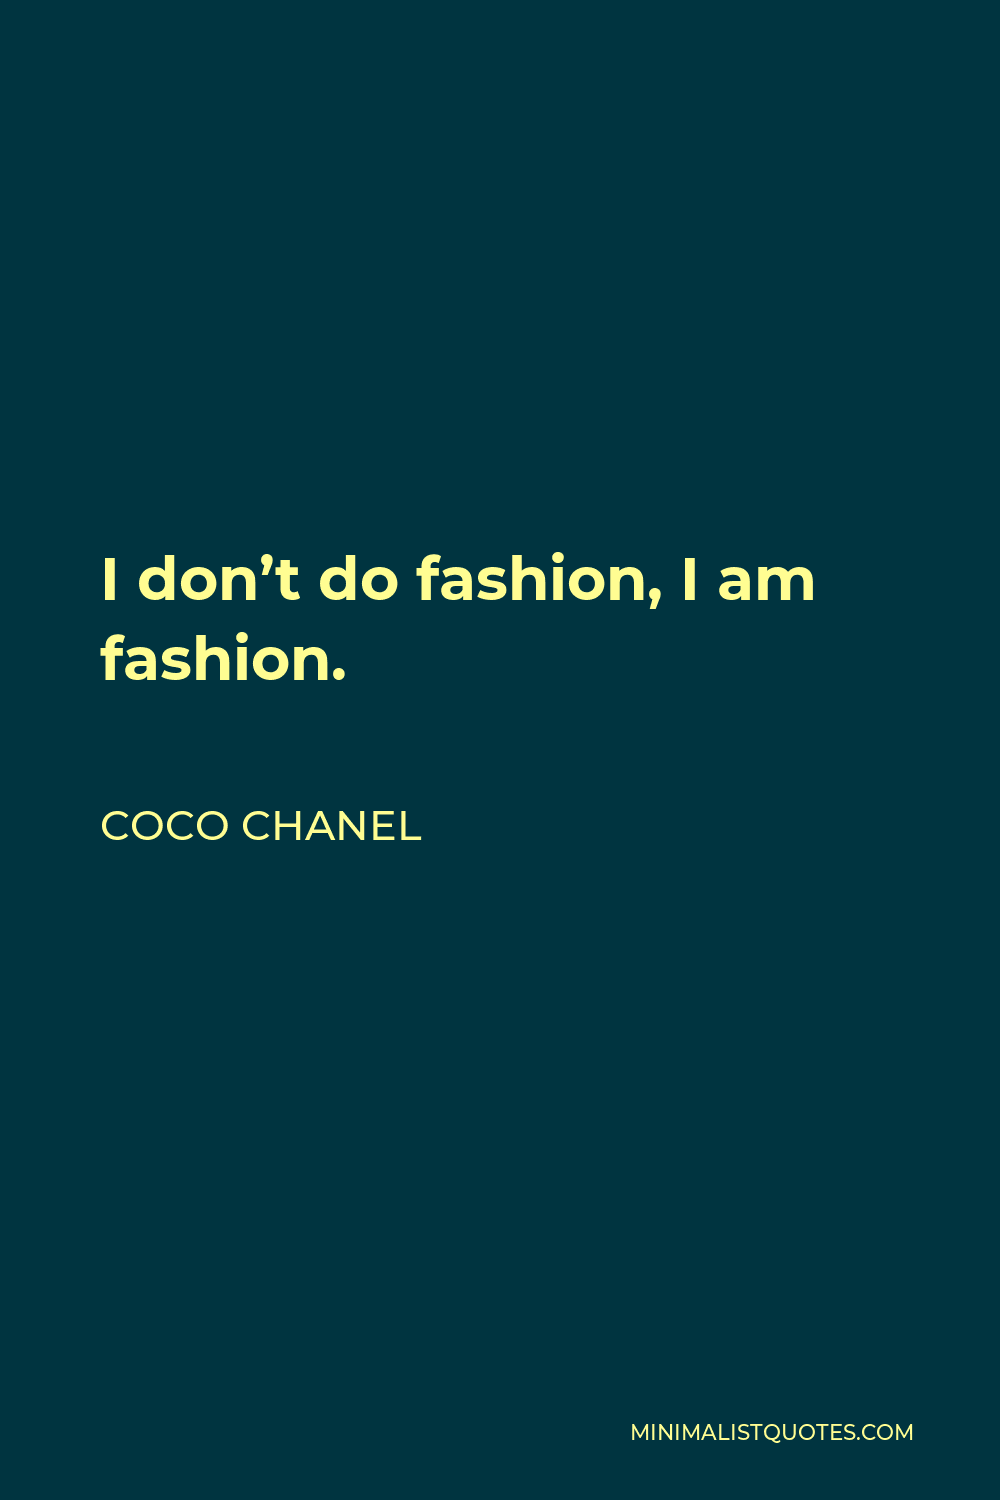 Tổng hợp 59 về coco chanel quotes on fashion hay nhất  cdgdbentreeduvn